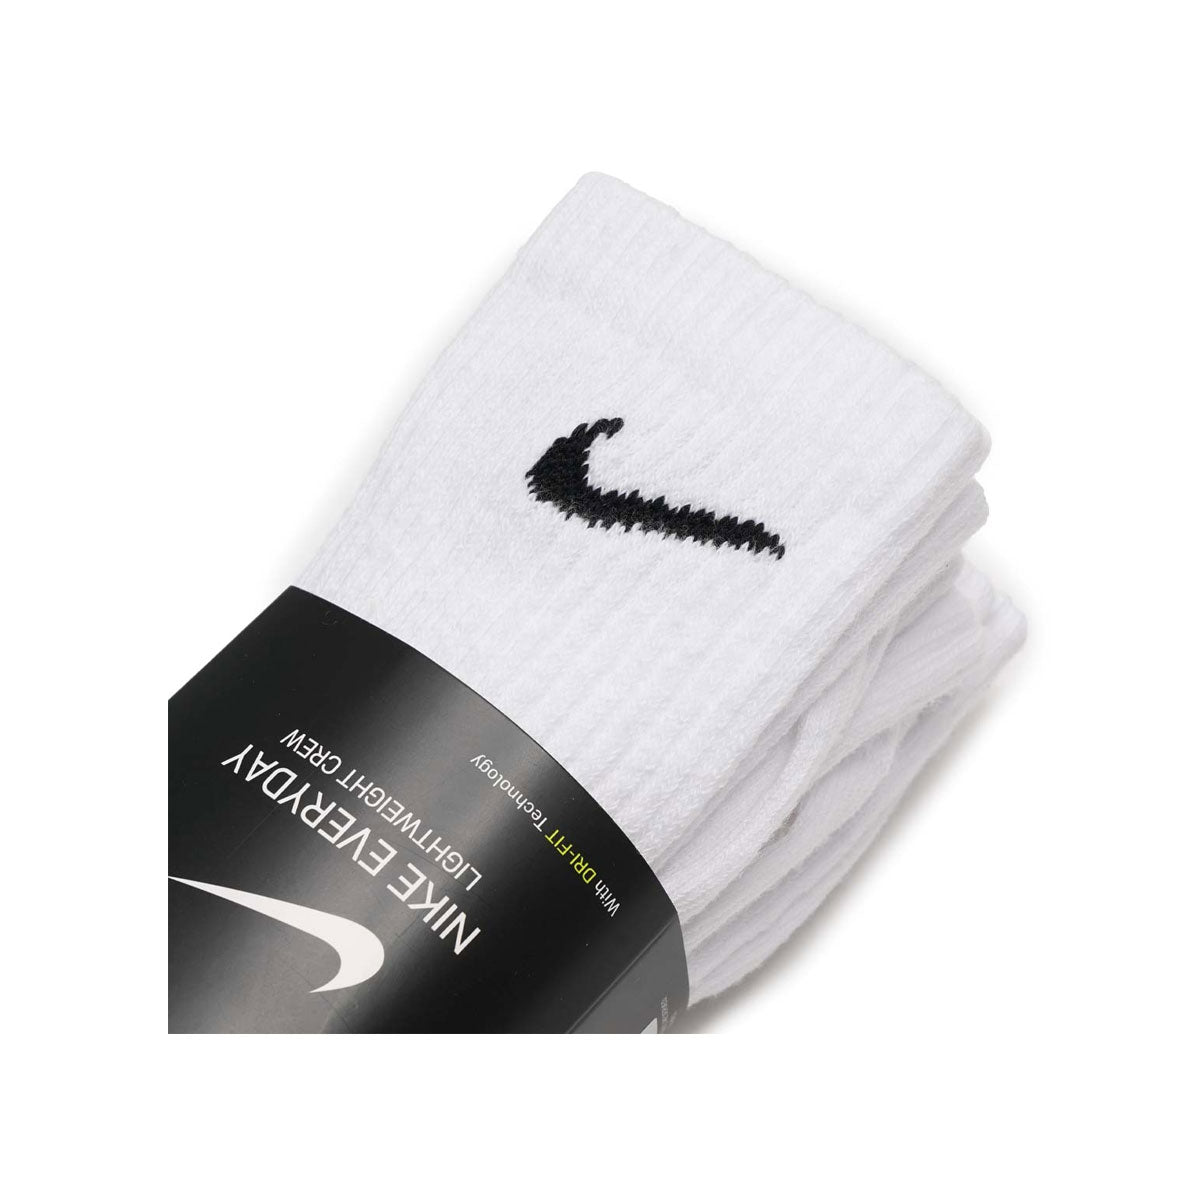 Nike Everyday Lightweight Training Socks 3 Pack